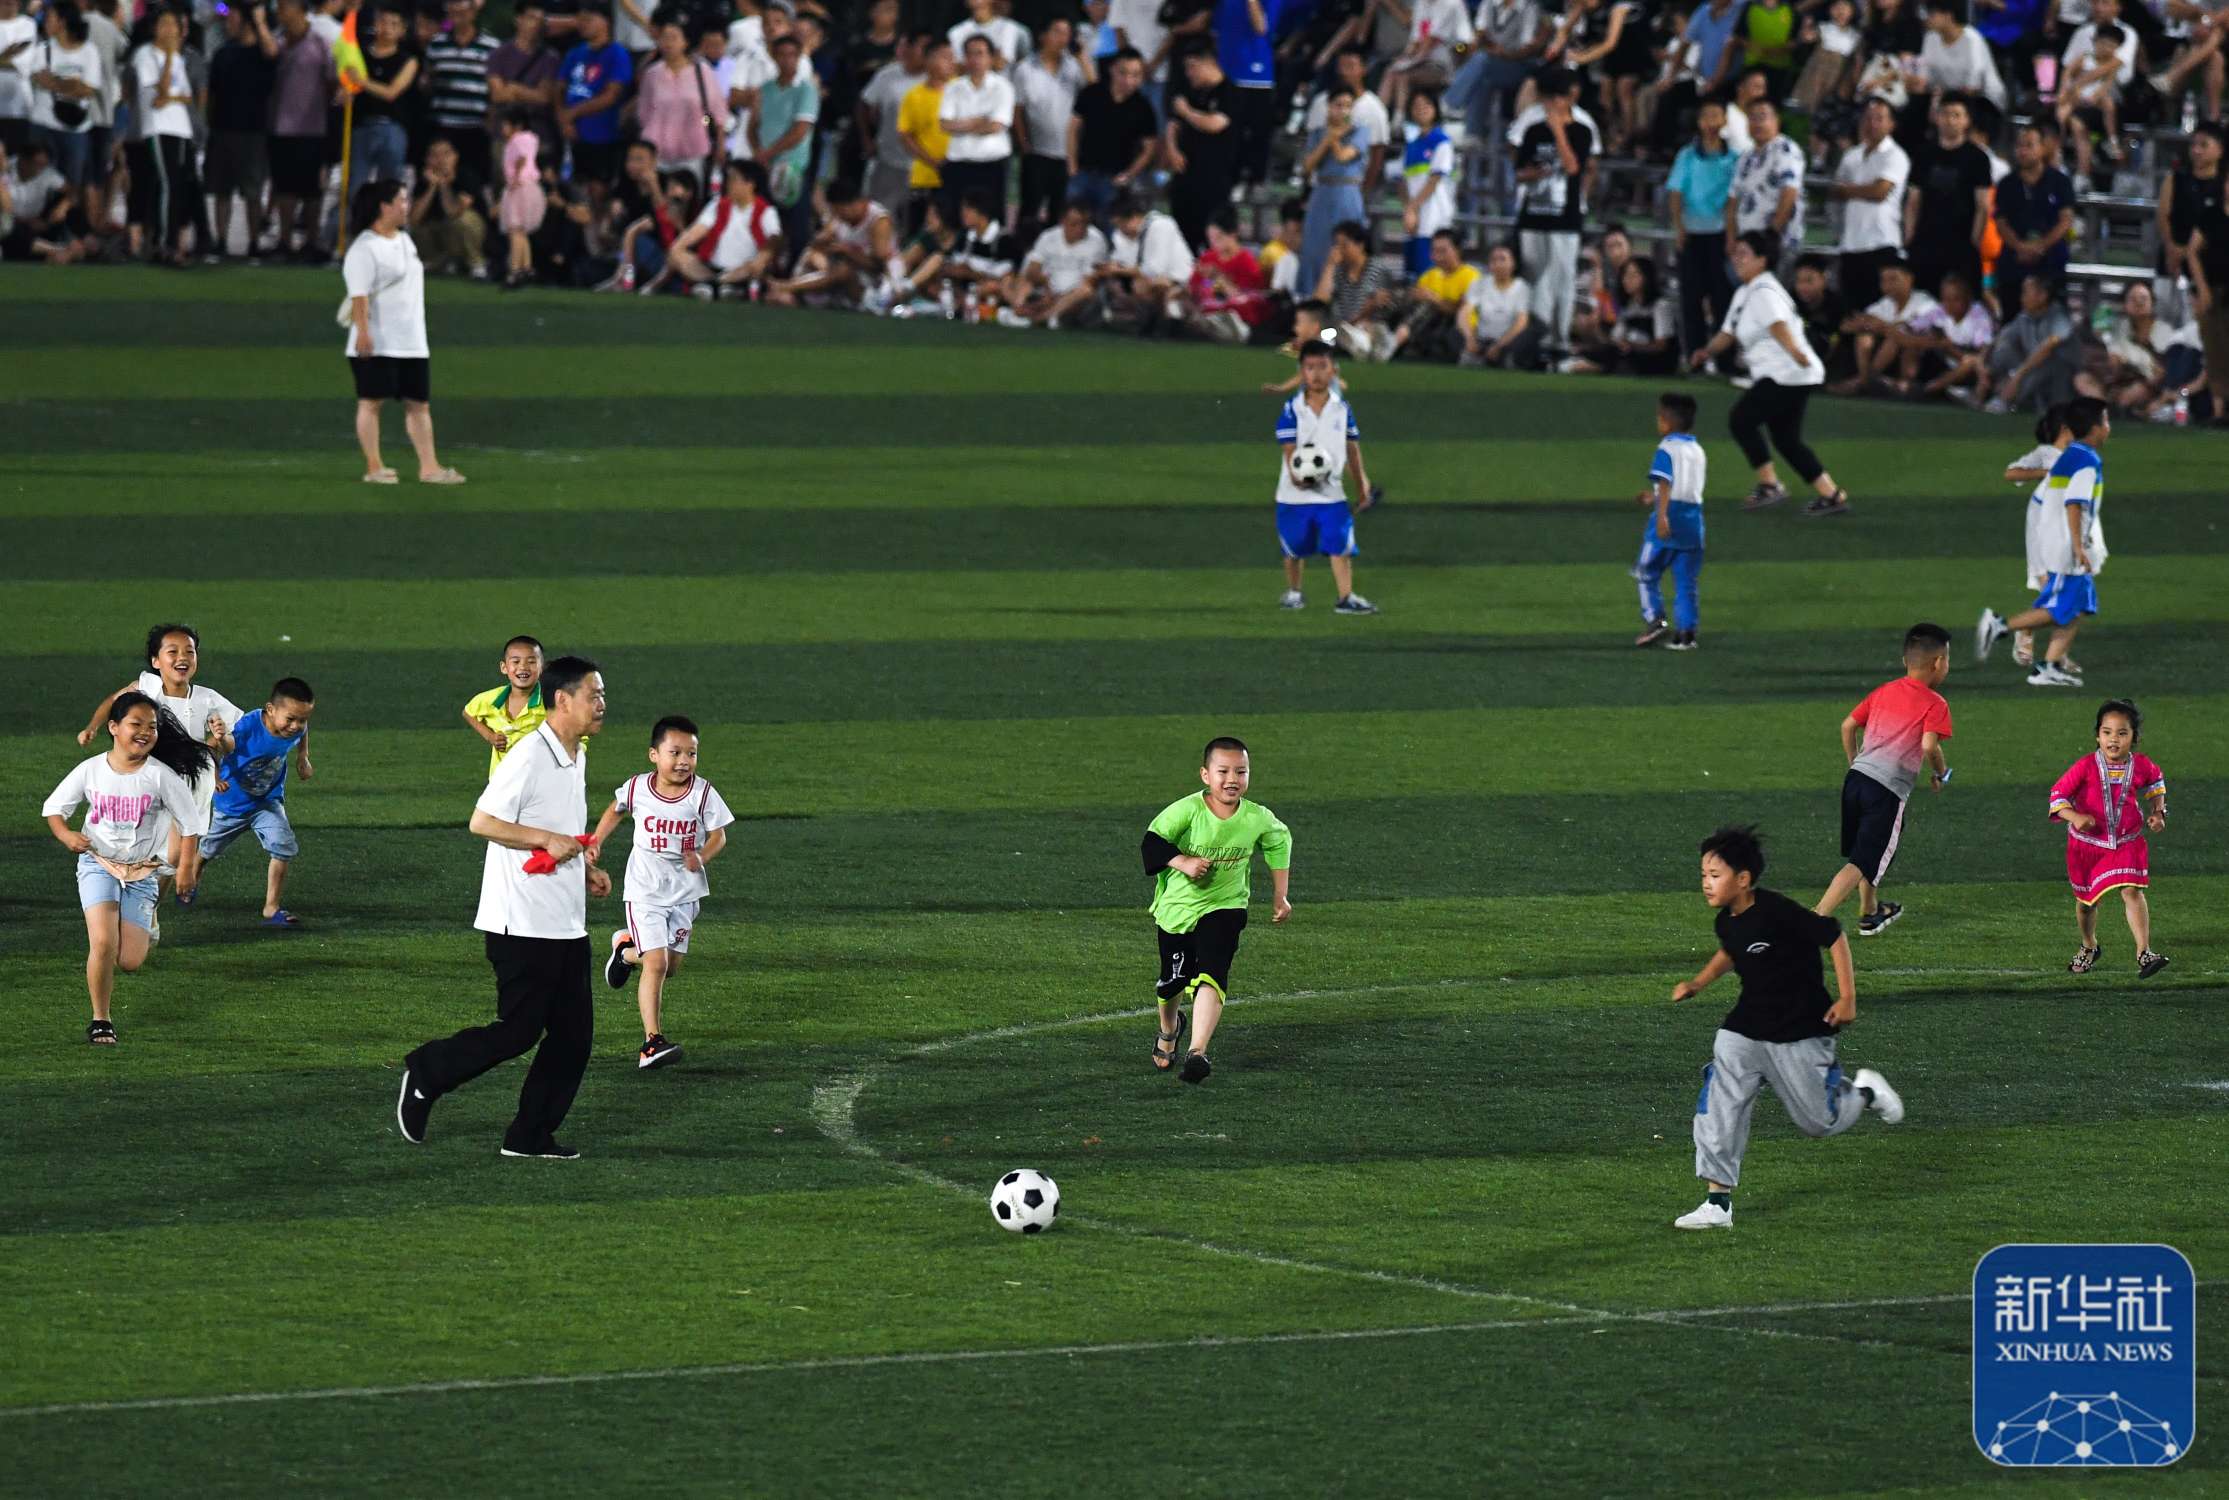 Ignite Summer Football Enthusiasm, Xinhua All Media+| Guizhou "Village Super" Village Super | Ethnic | Football